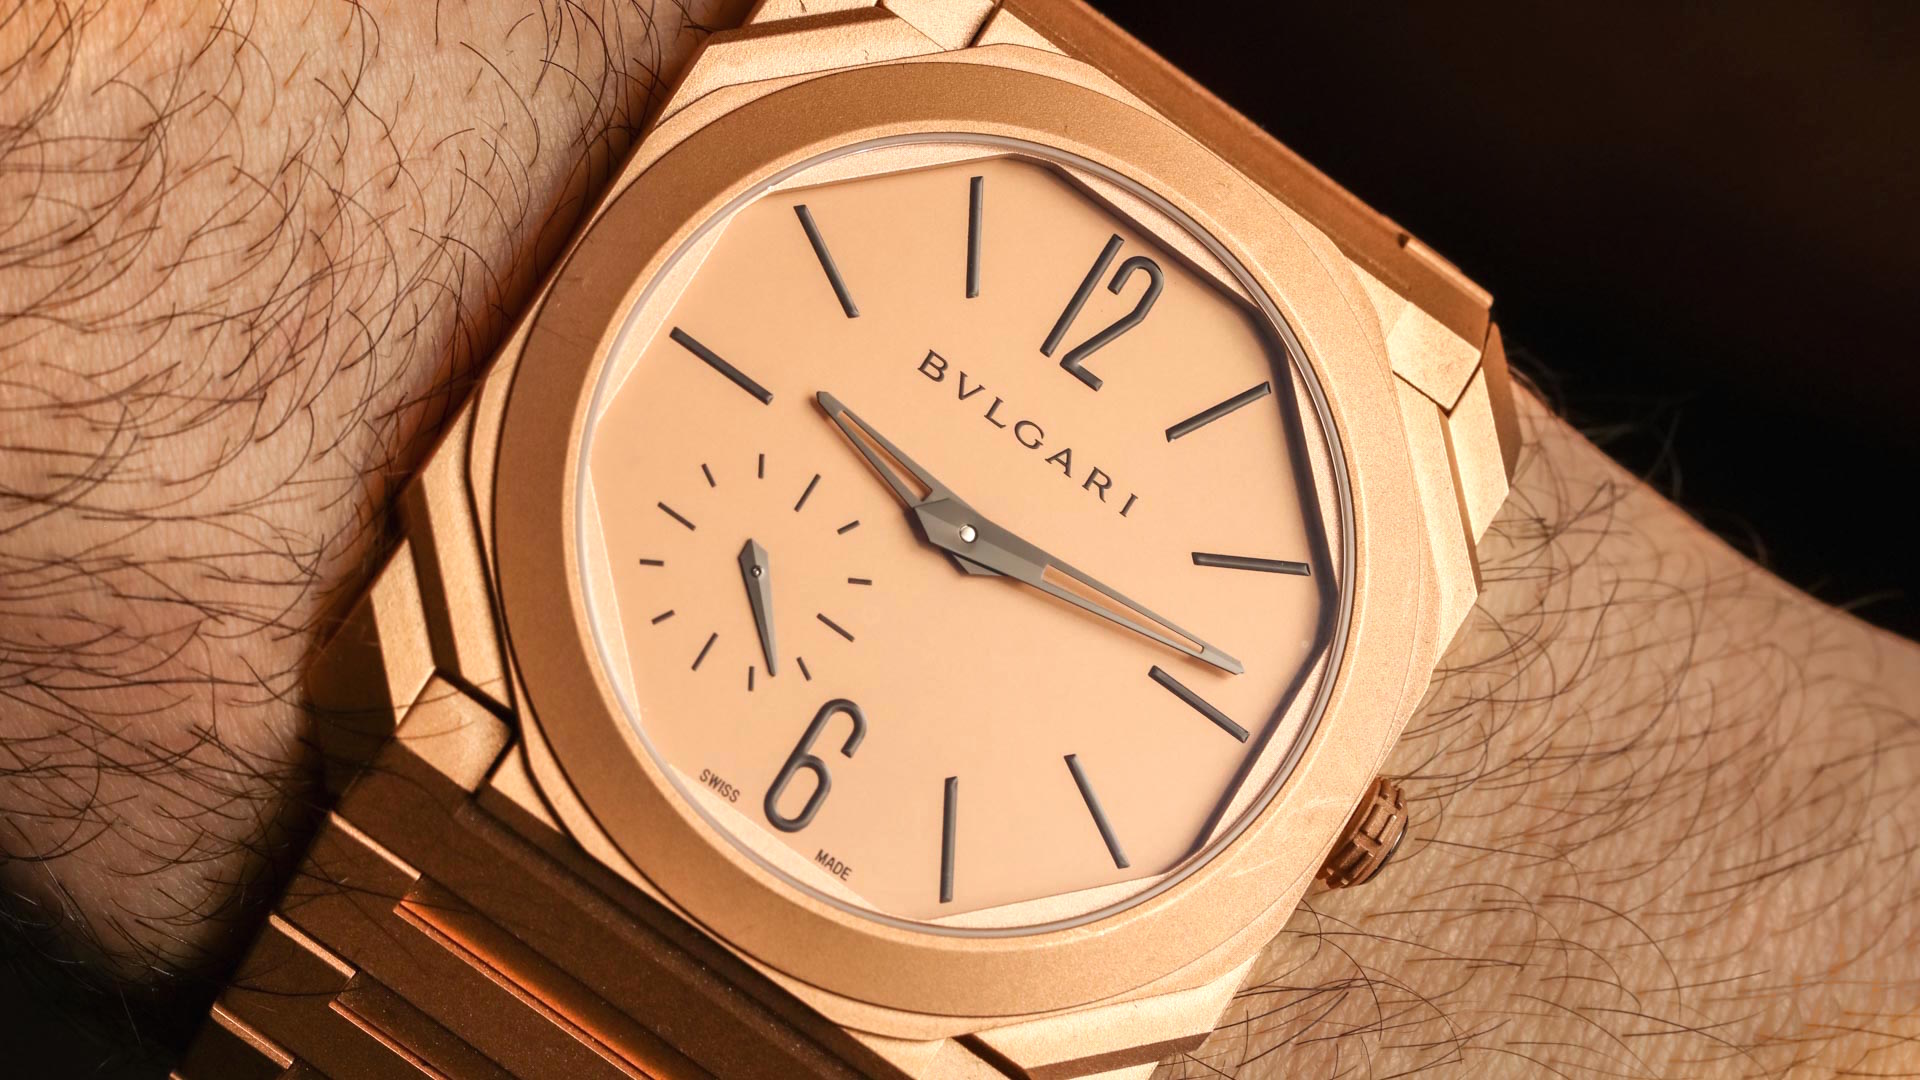 bulgari gold watch price